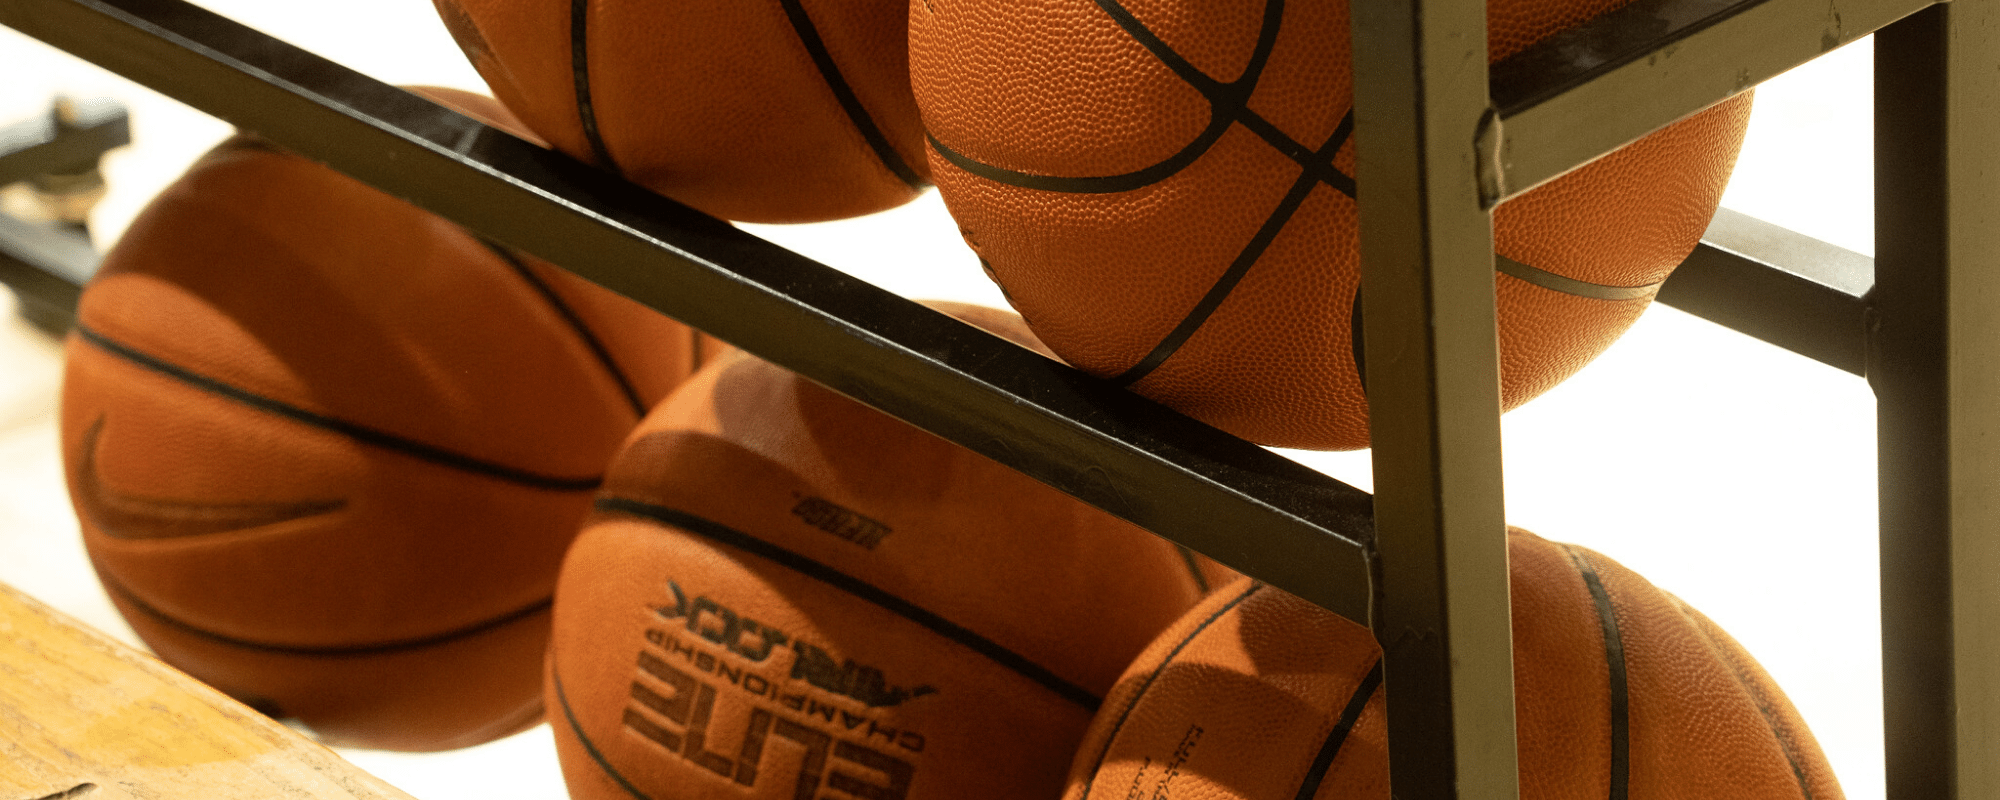 Basketballs on a rack